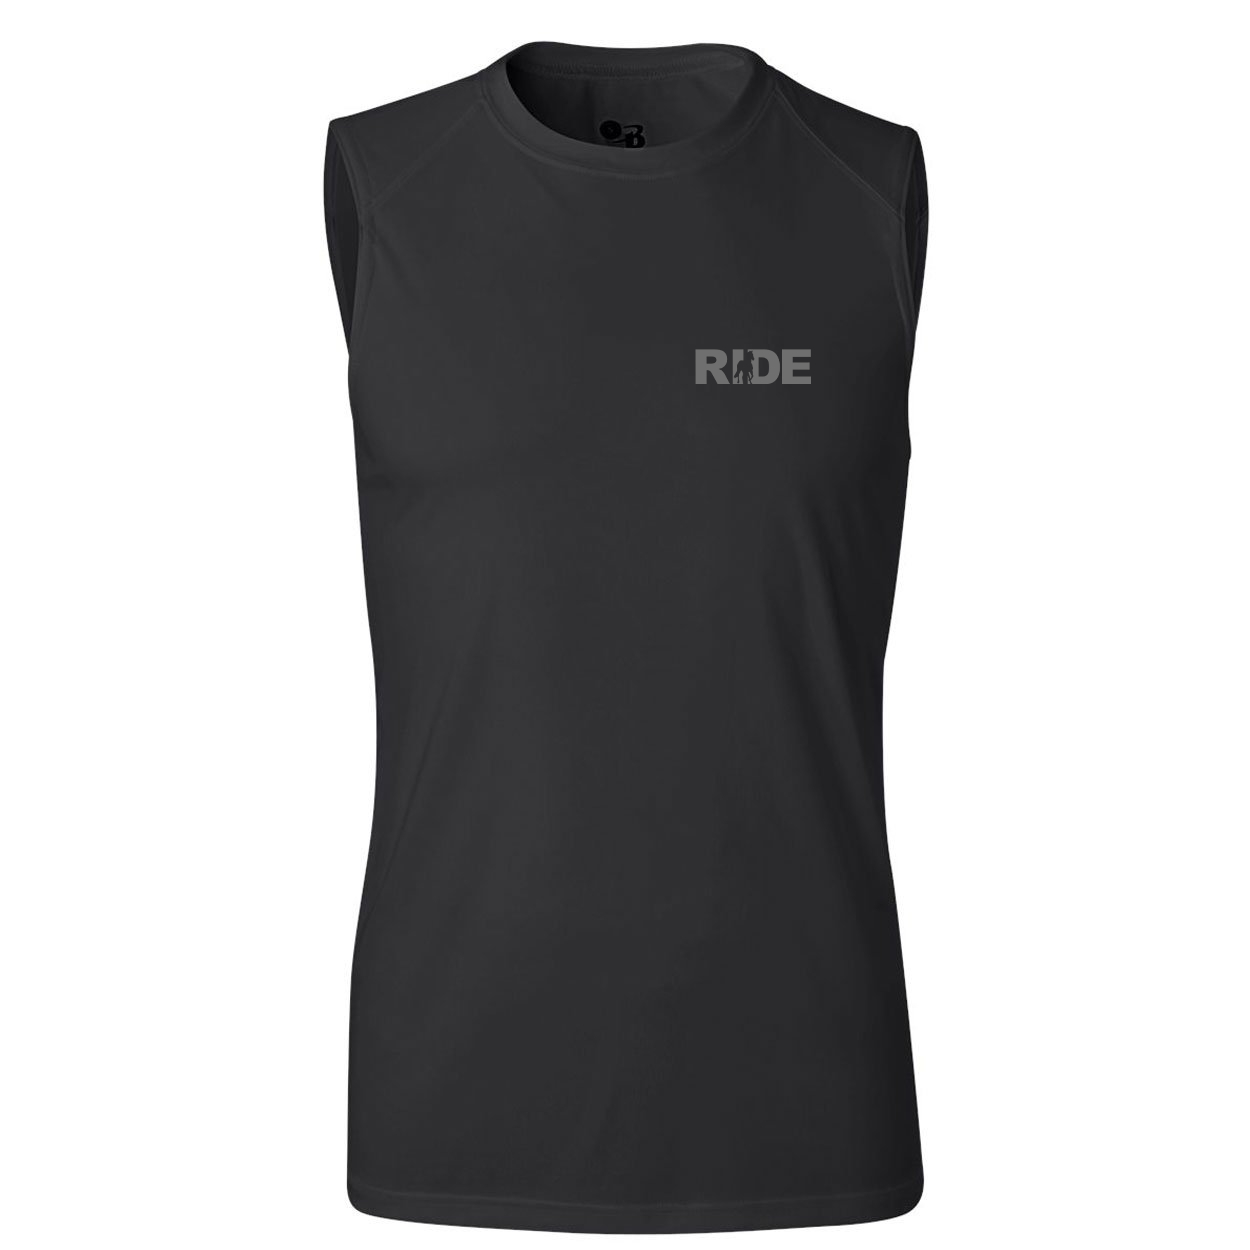 Ride Horse Logo Night Out Unisex Performance Sleeveless T-Shirt Black (Gray Logo)